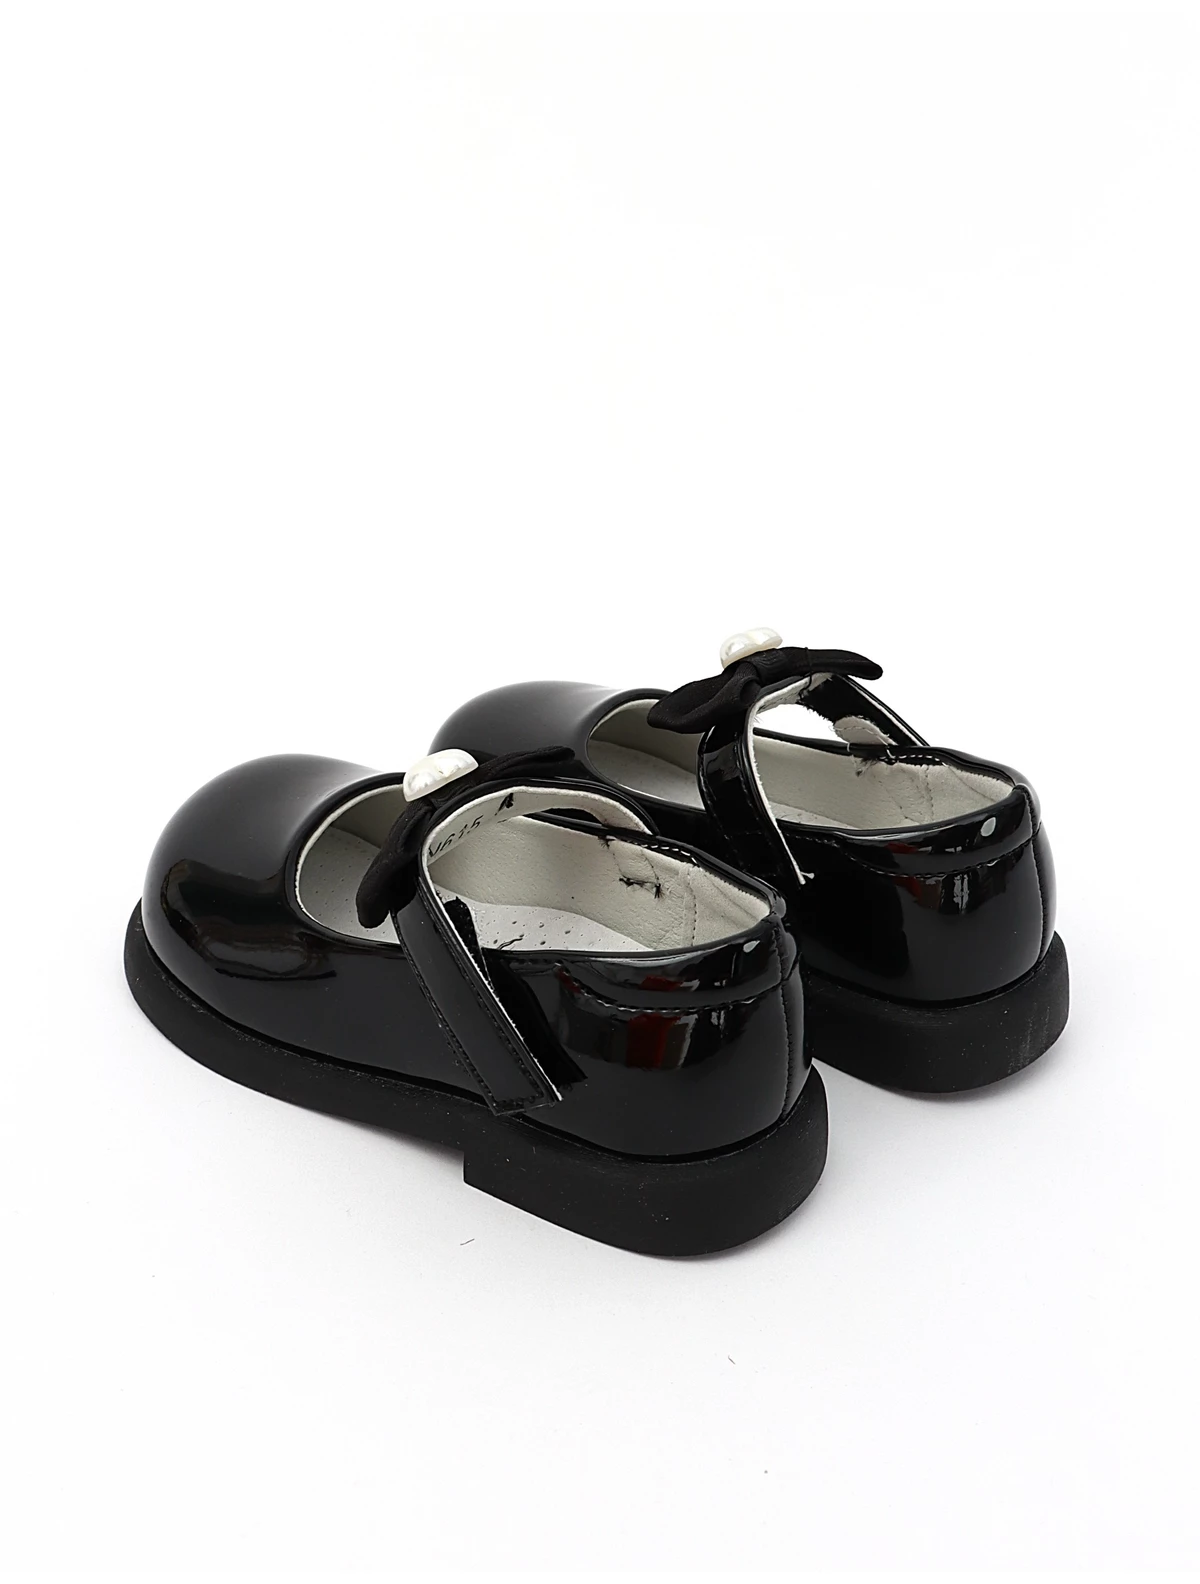 Pantofiori Ruxandra model negru